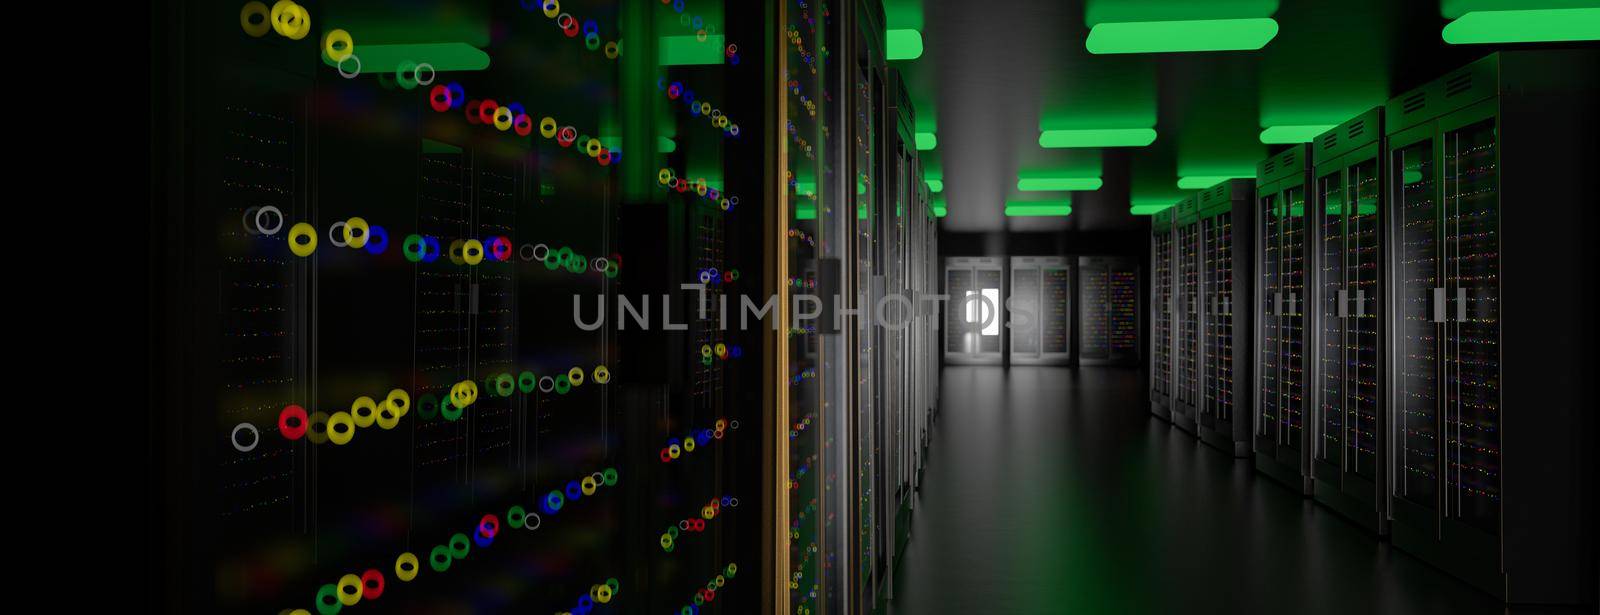 Server room data center. Backup, mining, hosting, mainframe, farm and computer rack with storage information. 3d render by kwarkot